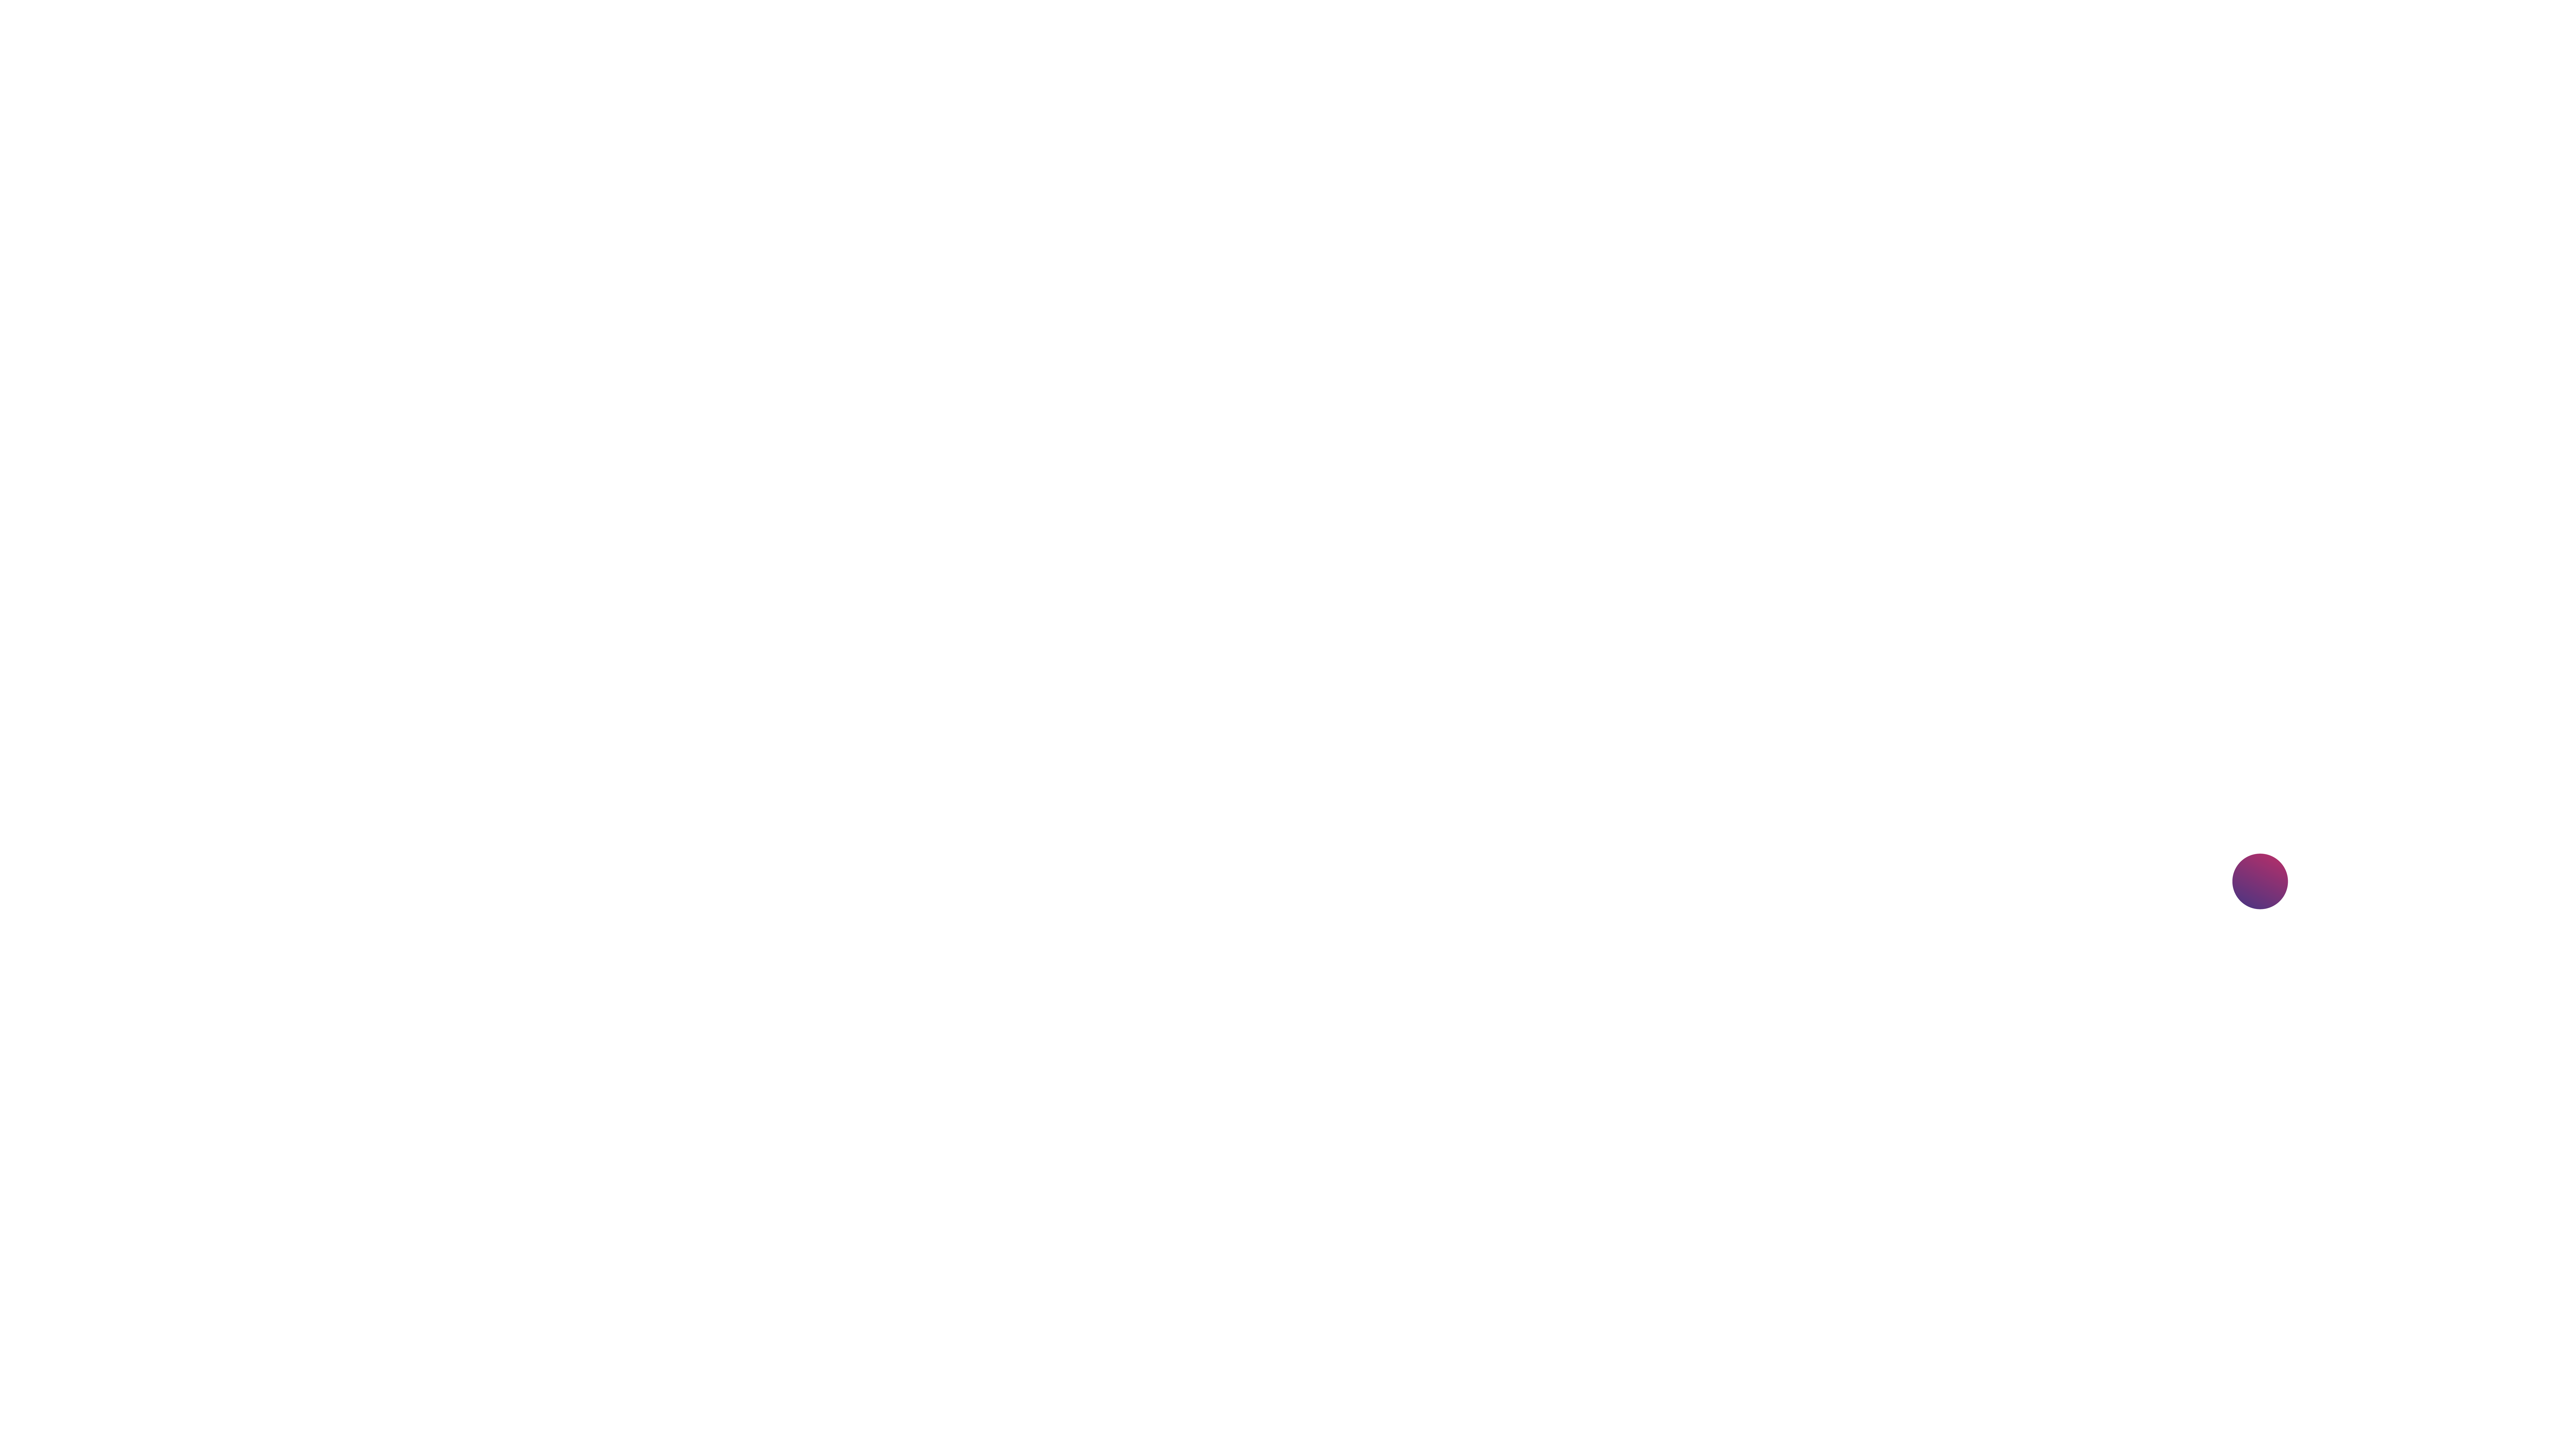 Jalubro - Making Legal Digital